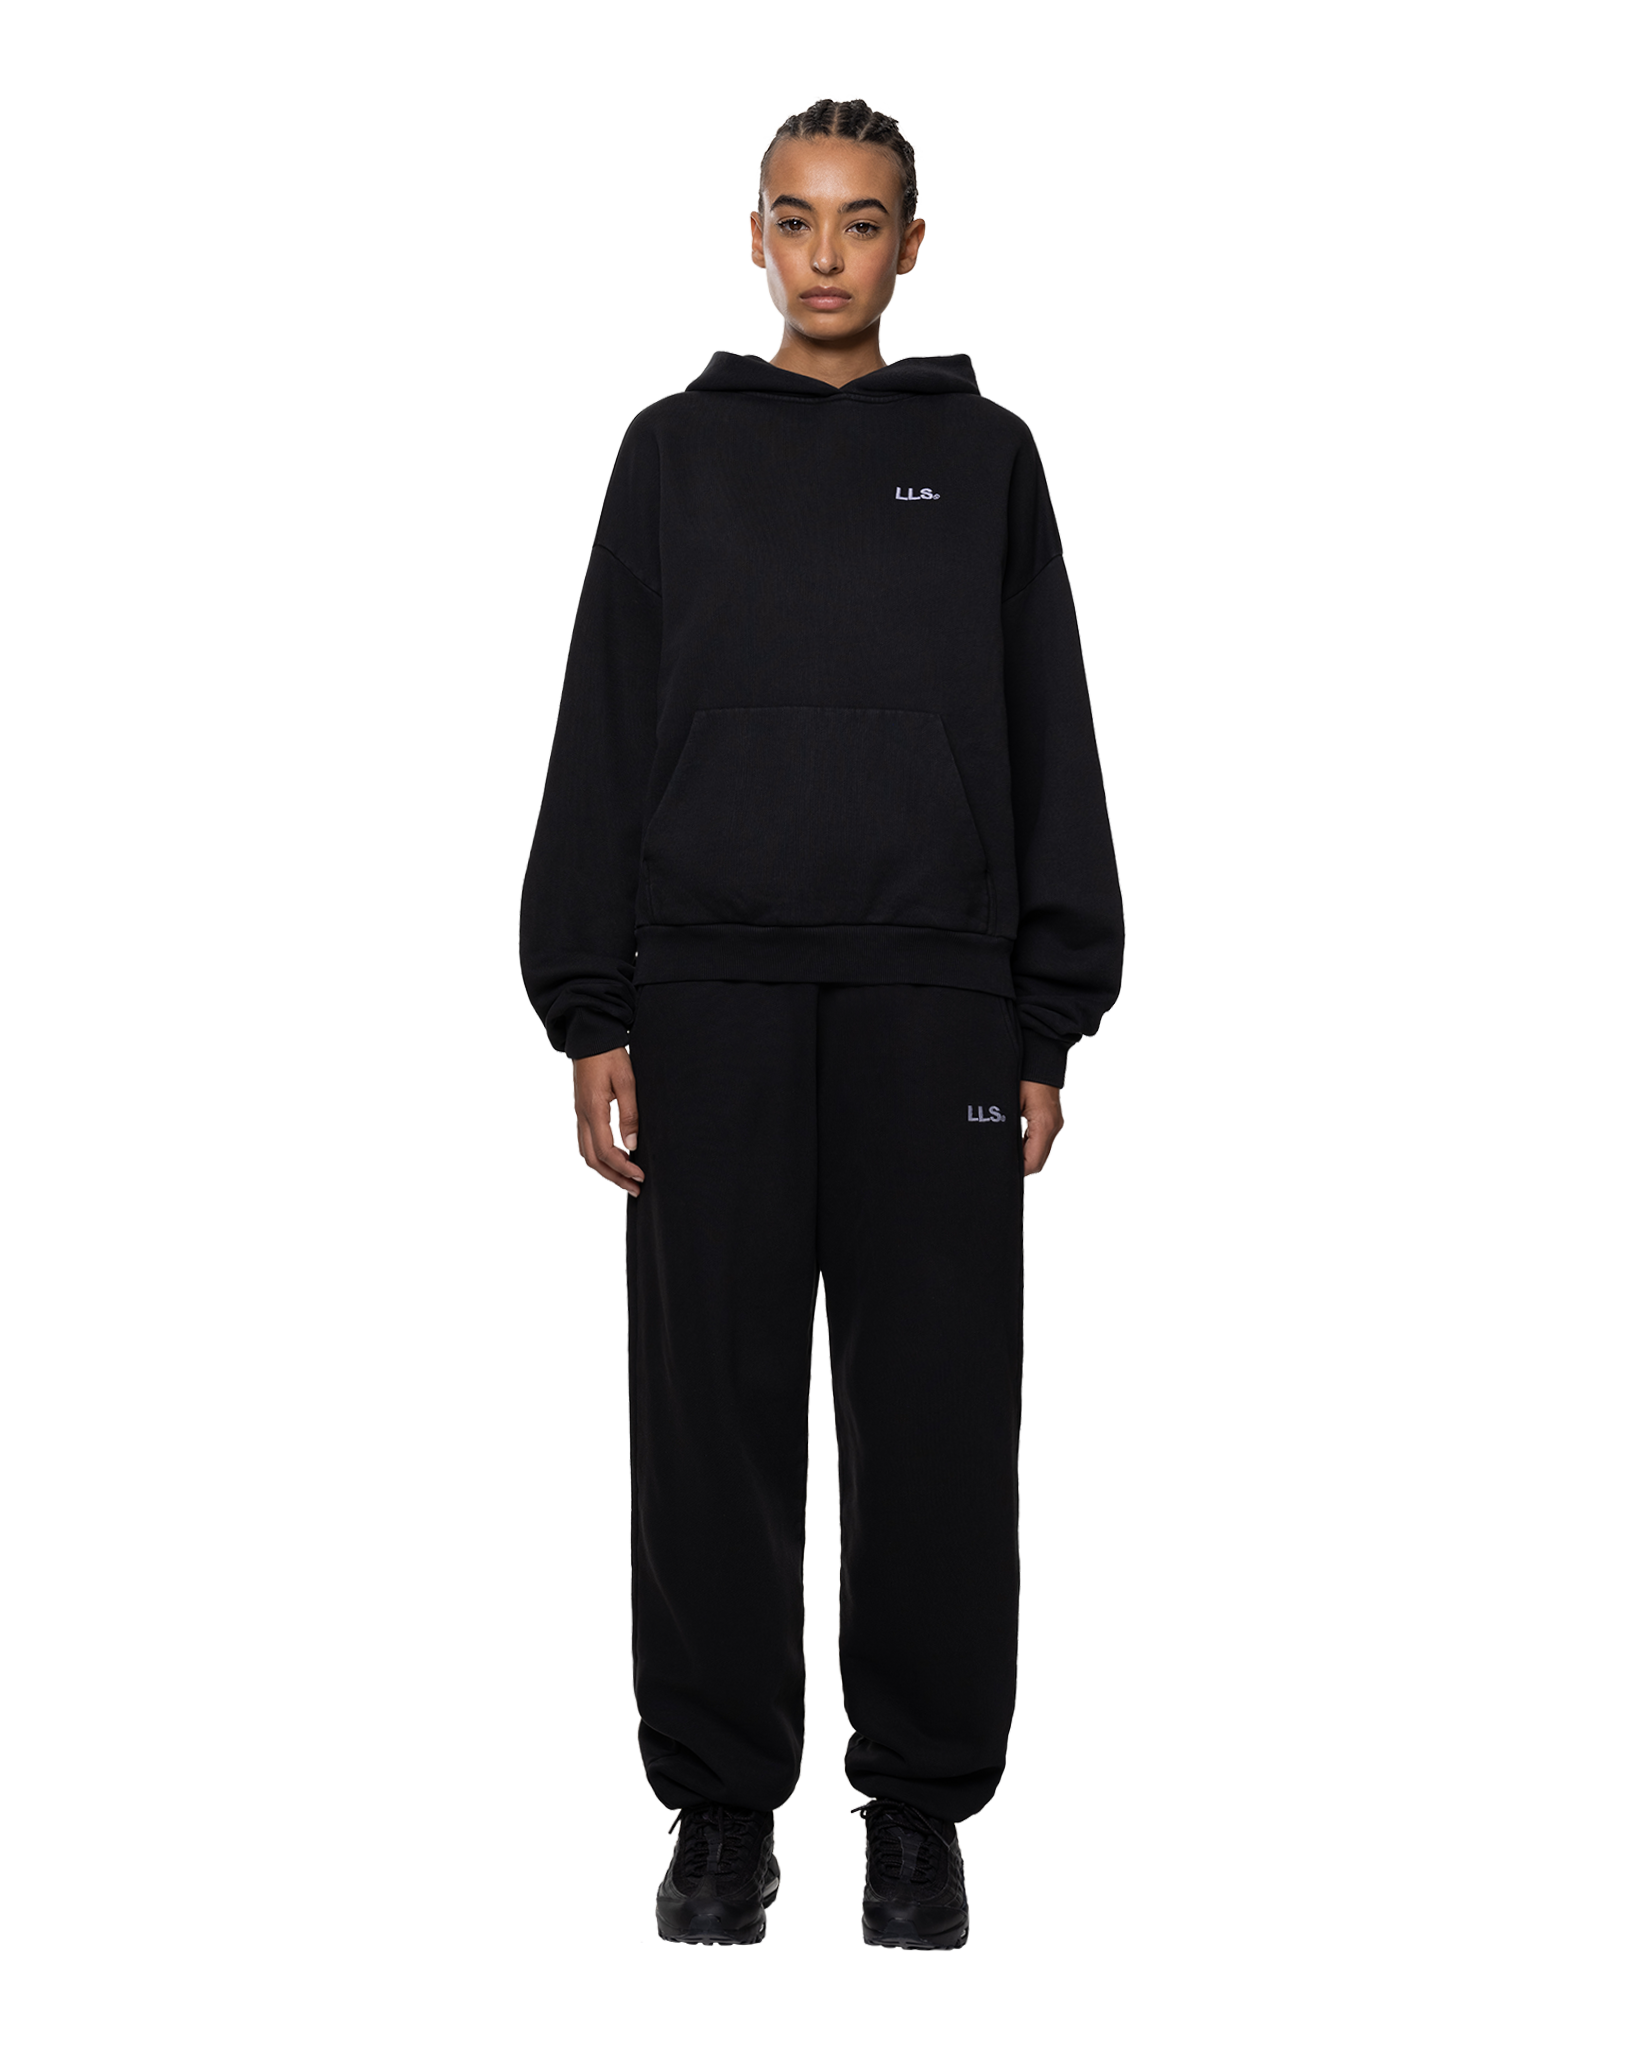 NWT STUNNING VOCAL SWEATSUIT SET sweatshirt jogger PANTS lace plus & reg  SM-3X